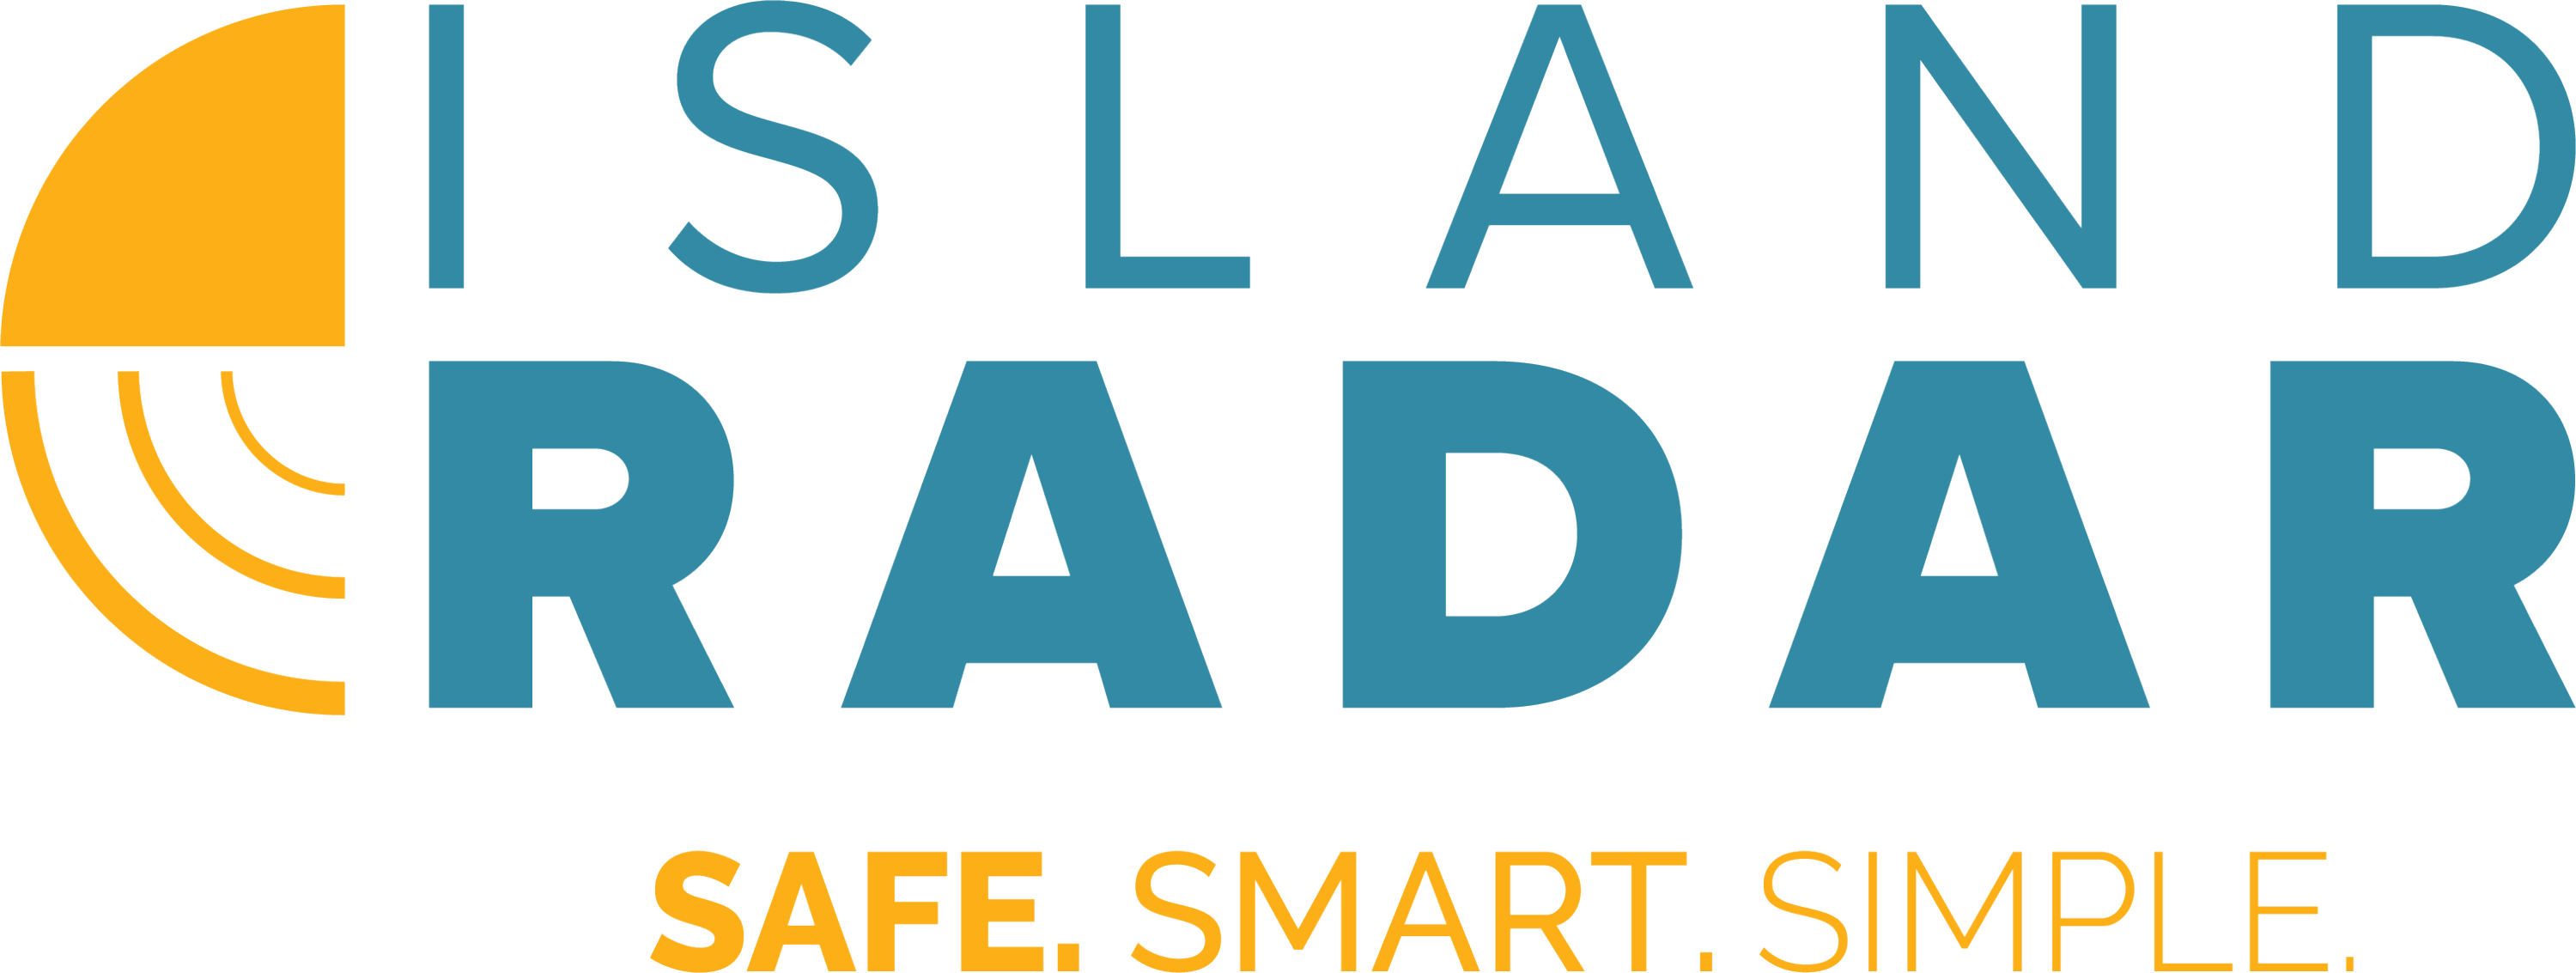 Island Radar logo